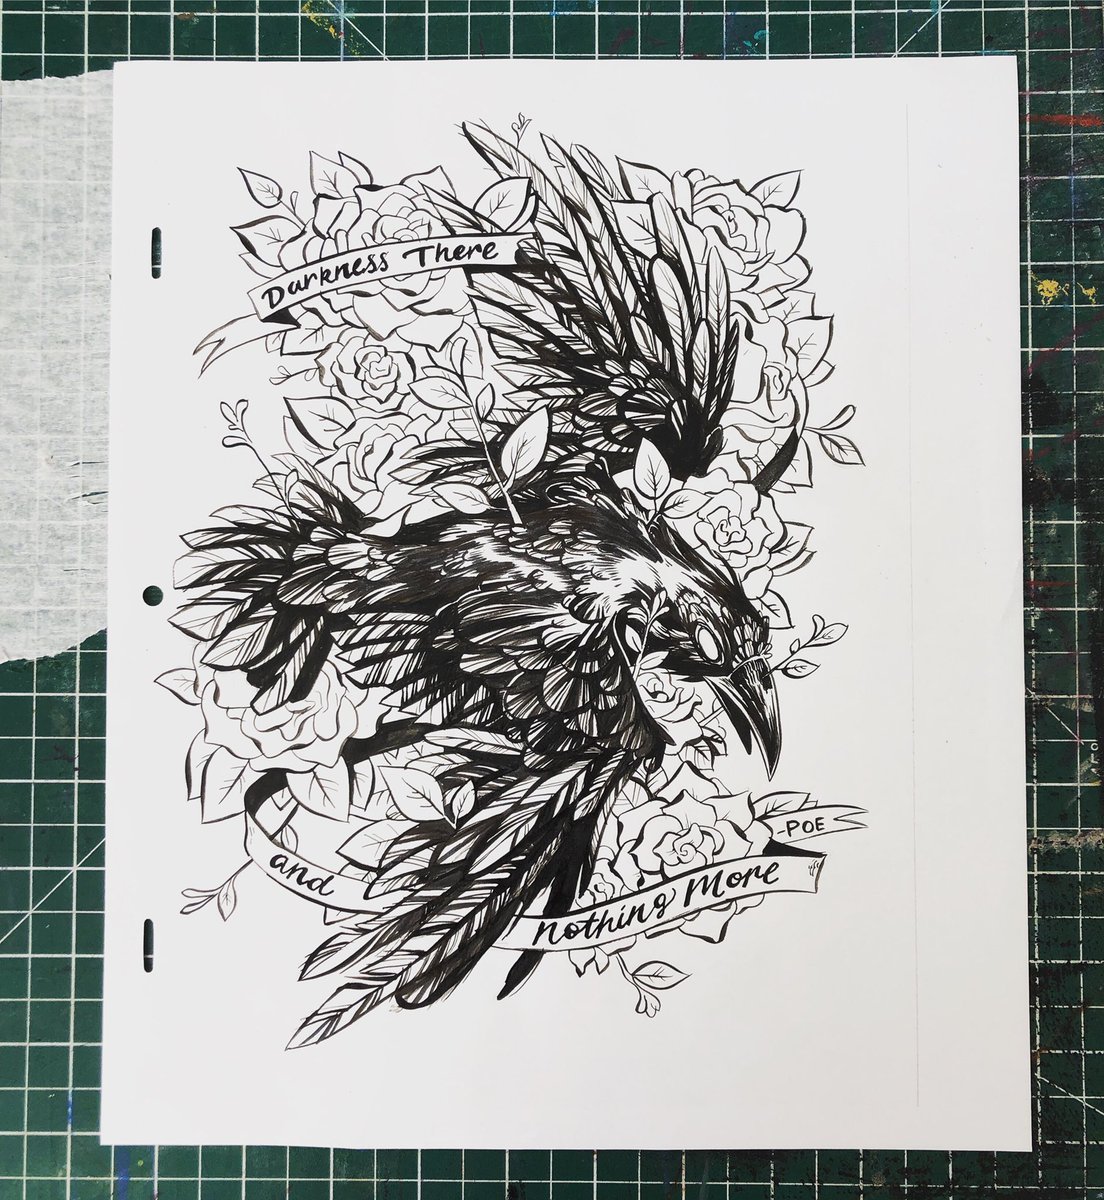 Finished up this birdie
#illustration #raven 